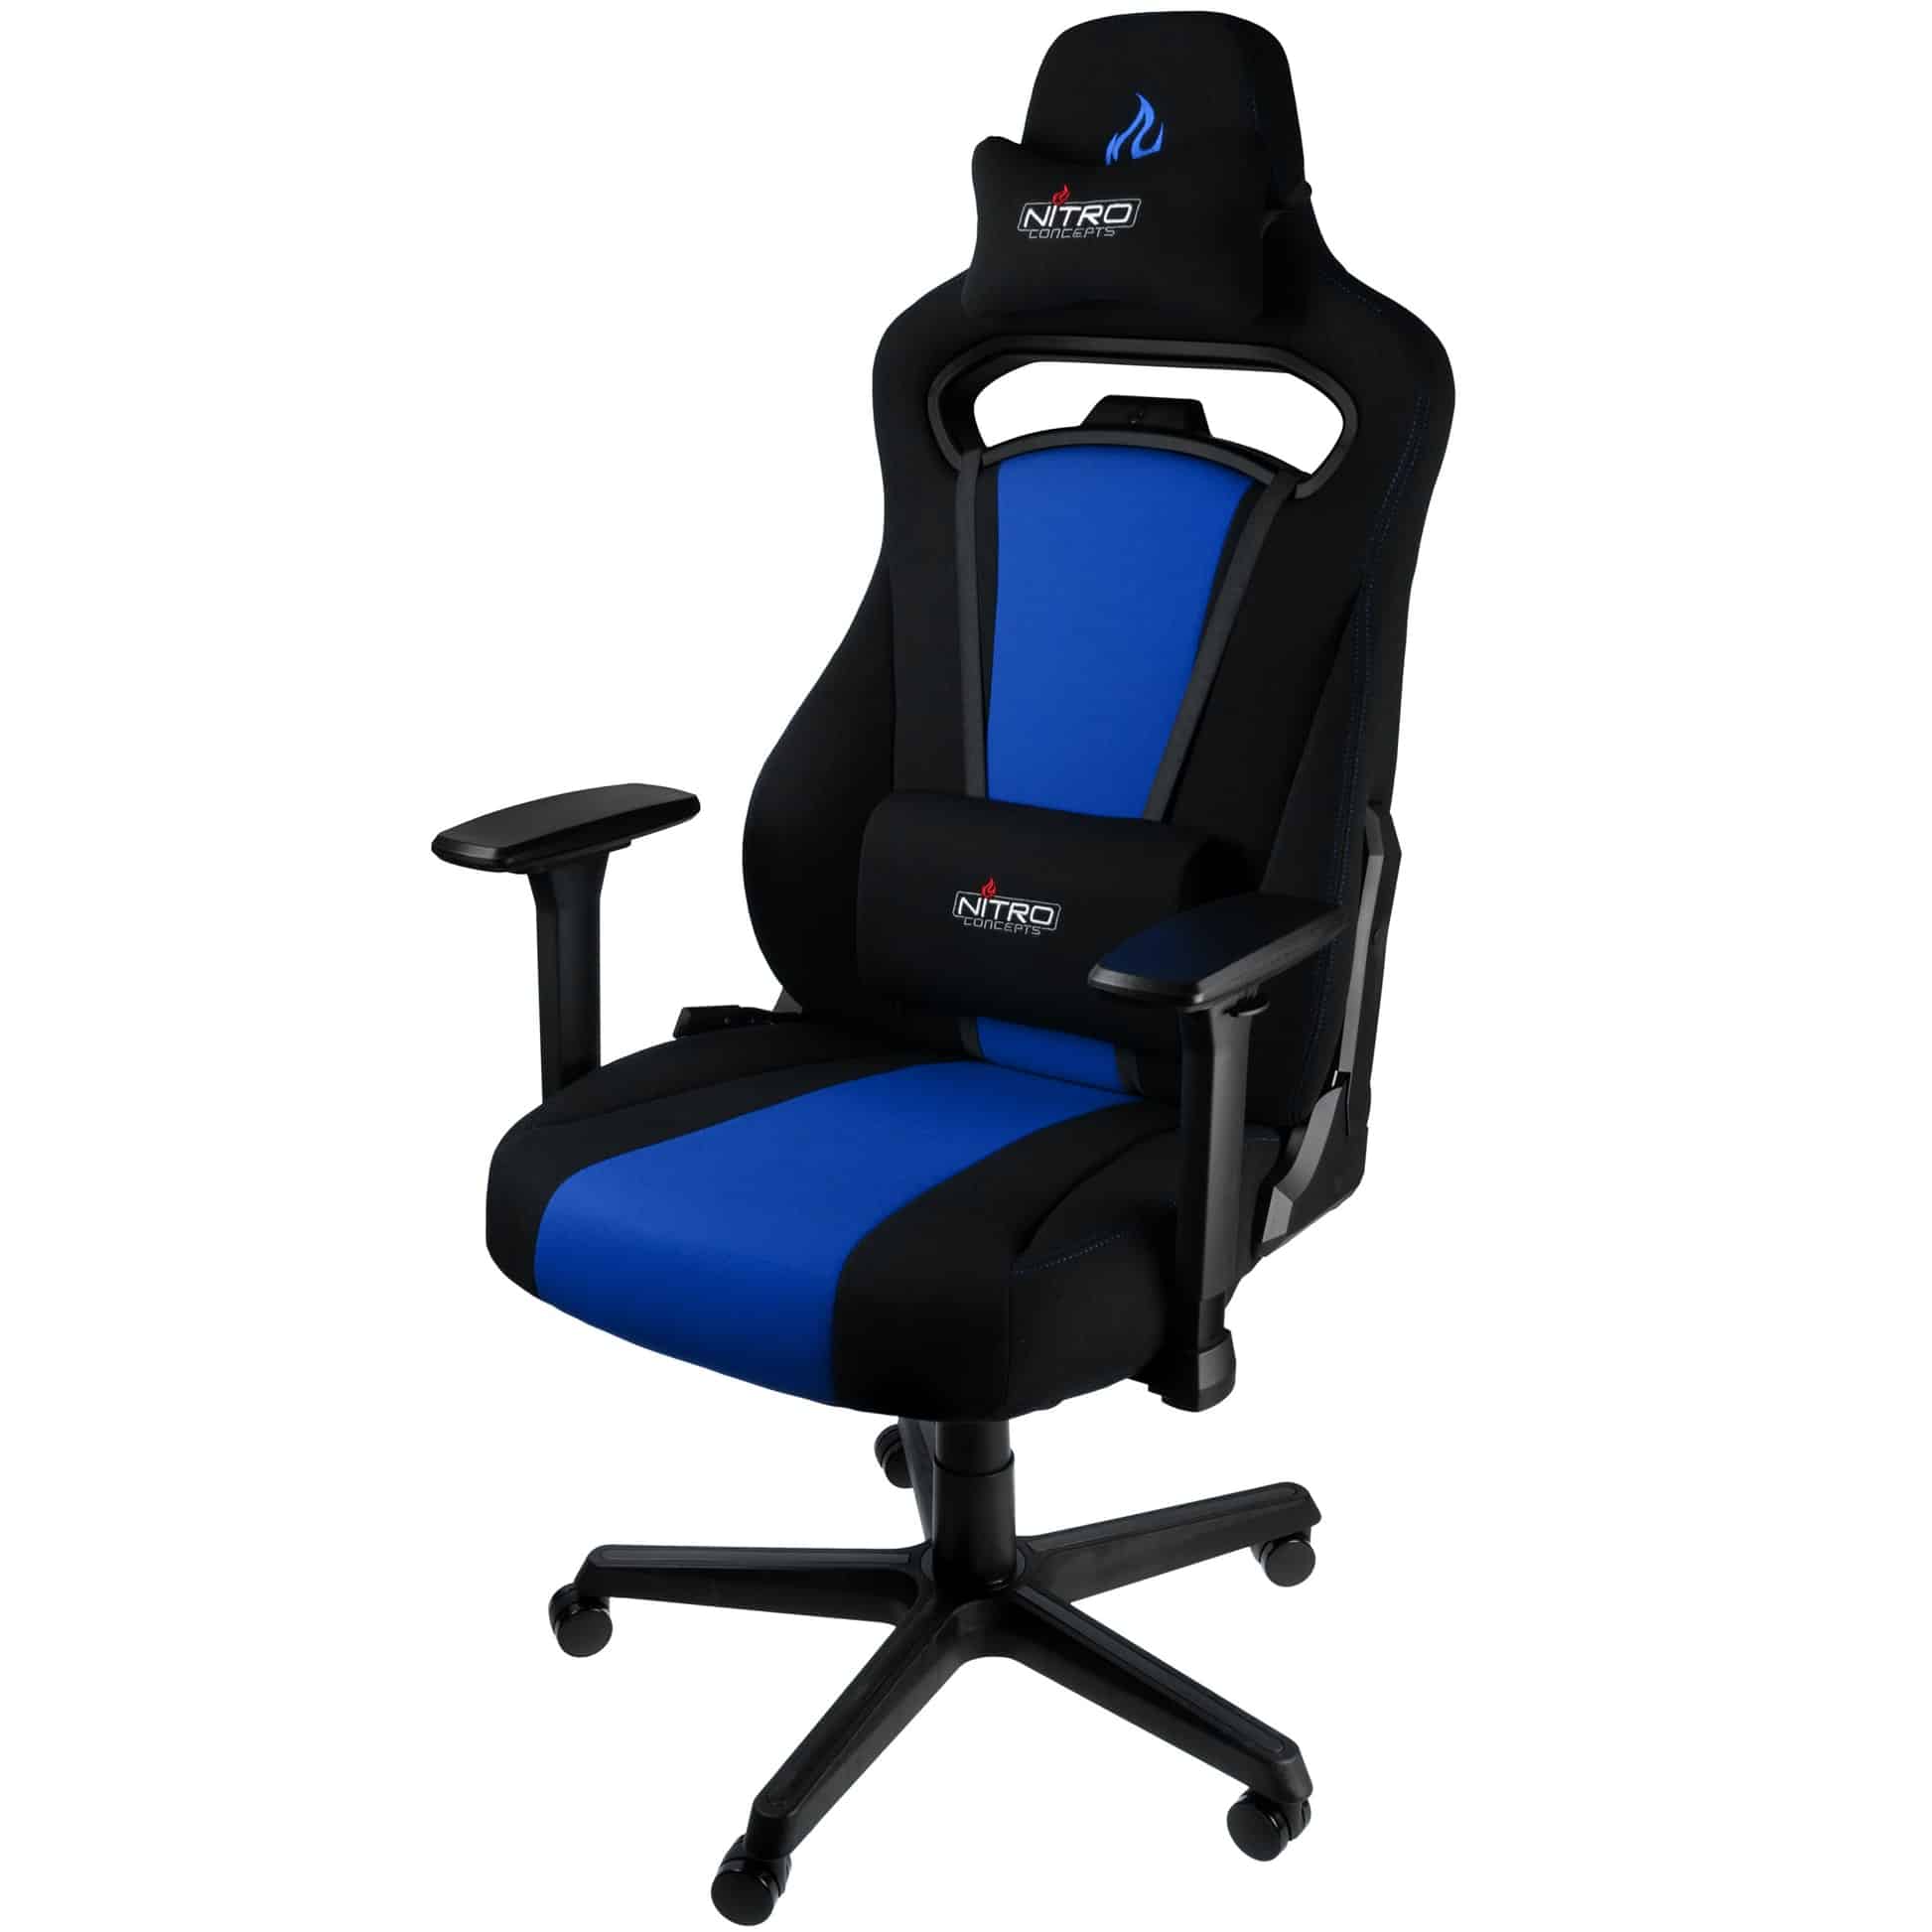 Nitro Concepts E250 Gaming Chair-Black/Blue - Store 974 | ستور ٩٧٤